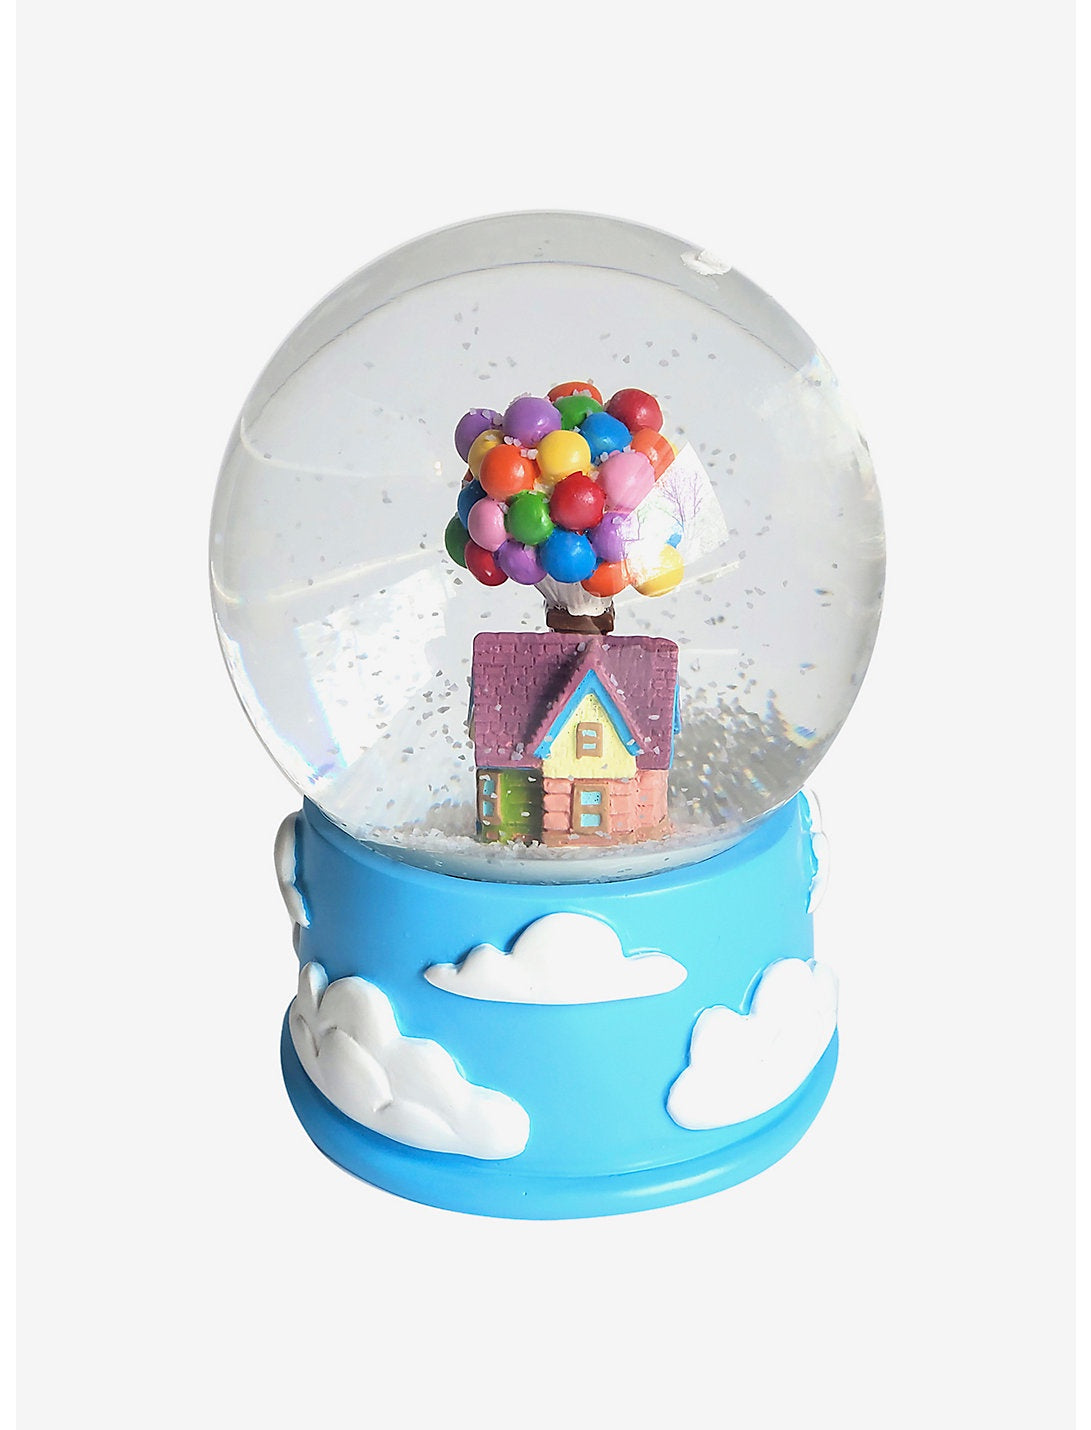 Disney Pixar Up Carl's House Snow Globe